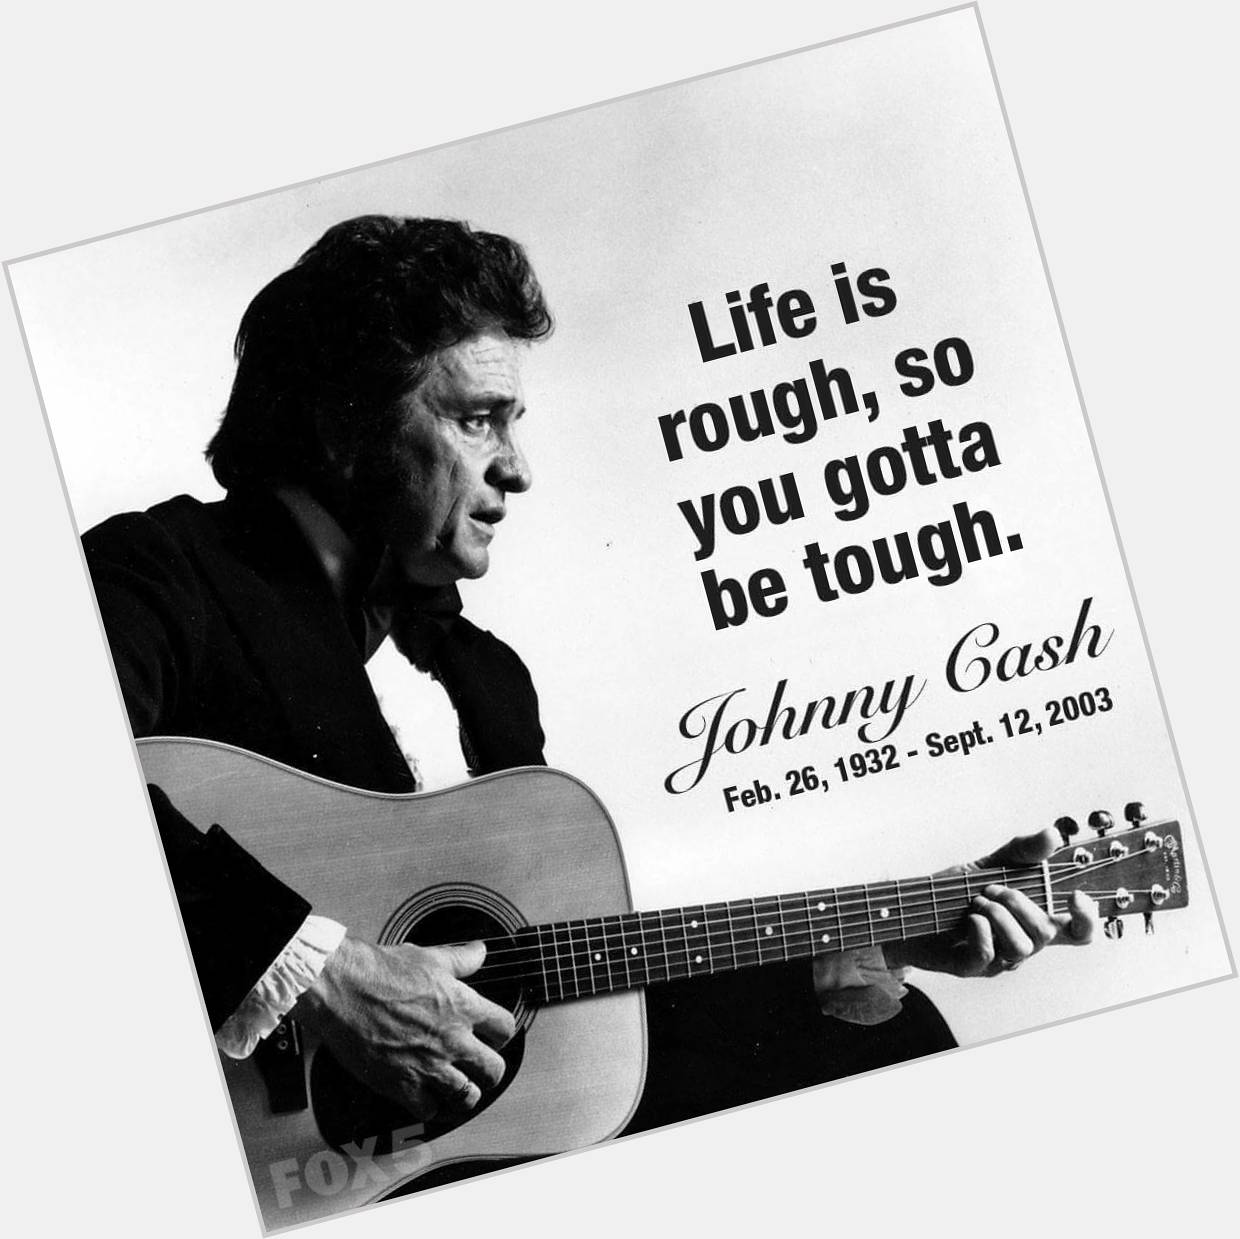 HAPPY BIRTHDAY to legendary musician Johnny Cash. 